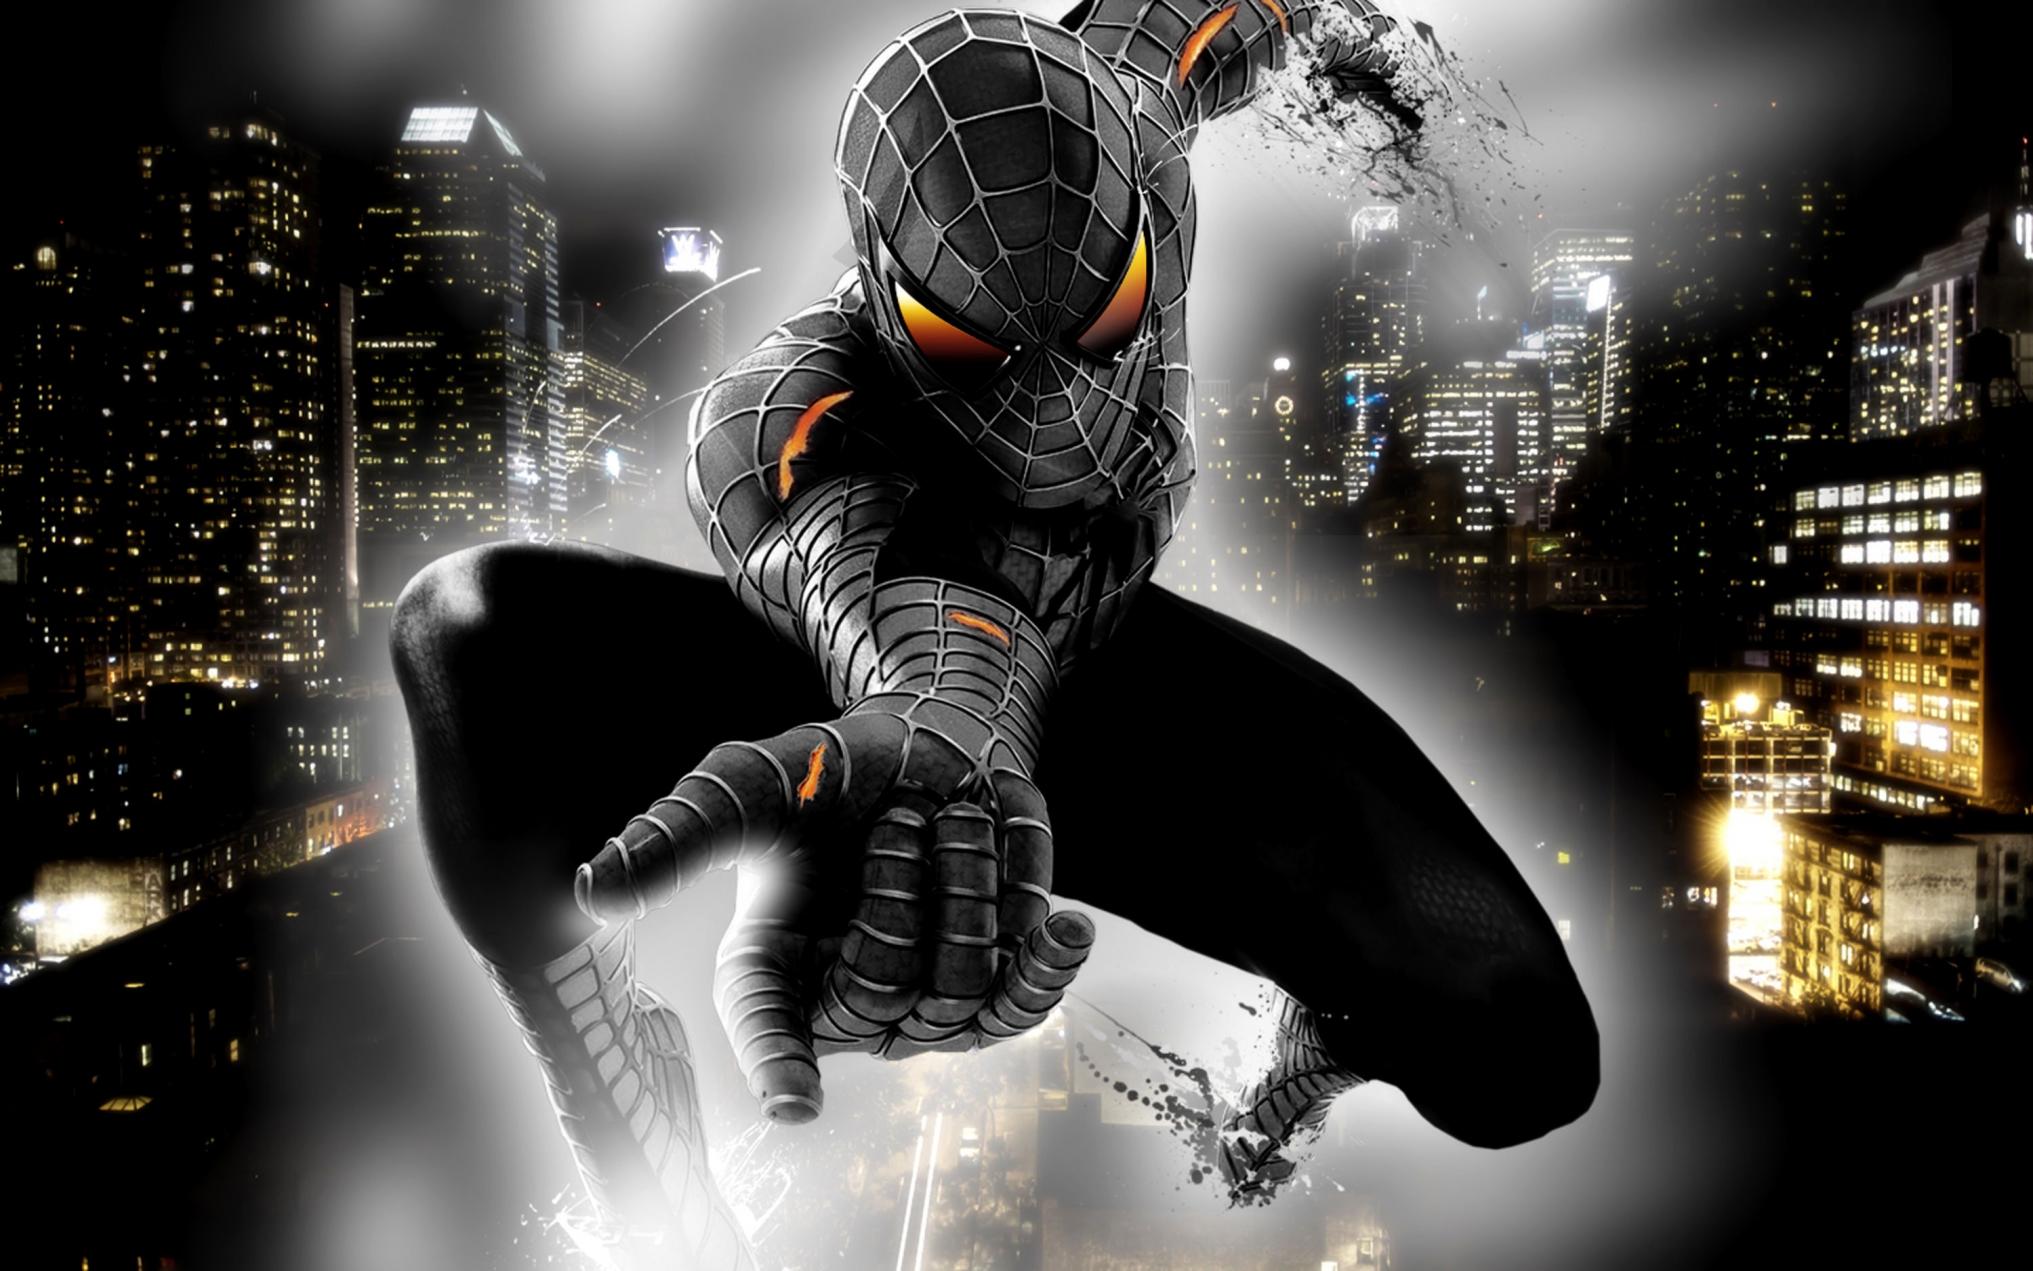 Spider man 3 wallpaper hd - 